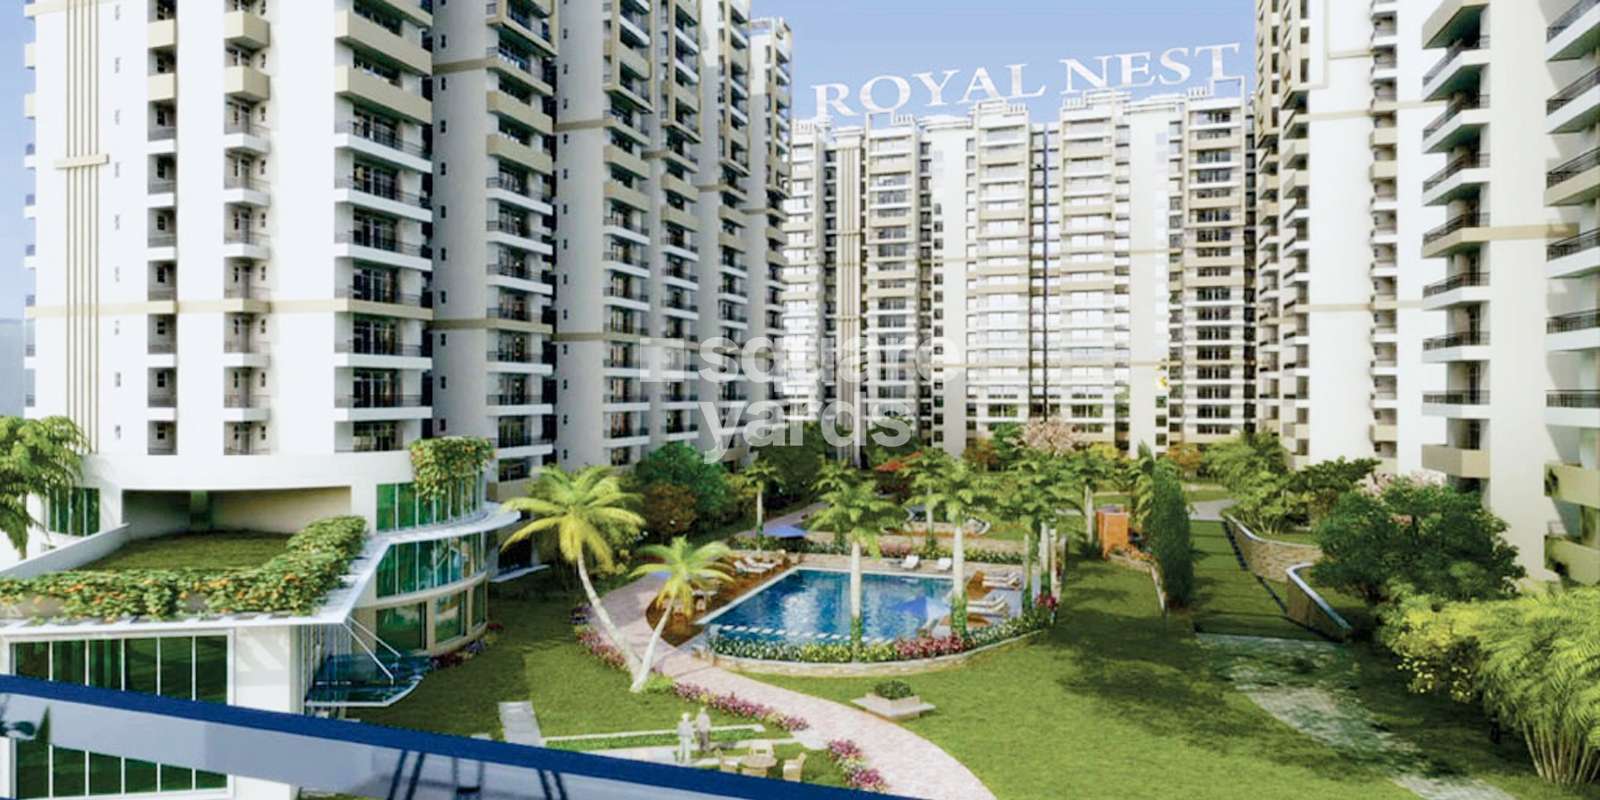 Omkar Royal Nest Cover Image